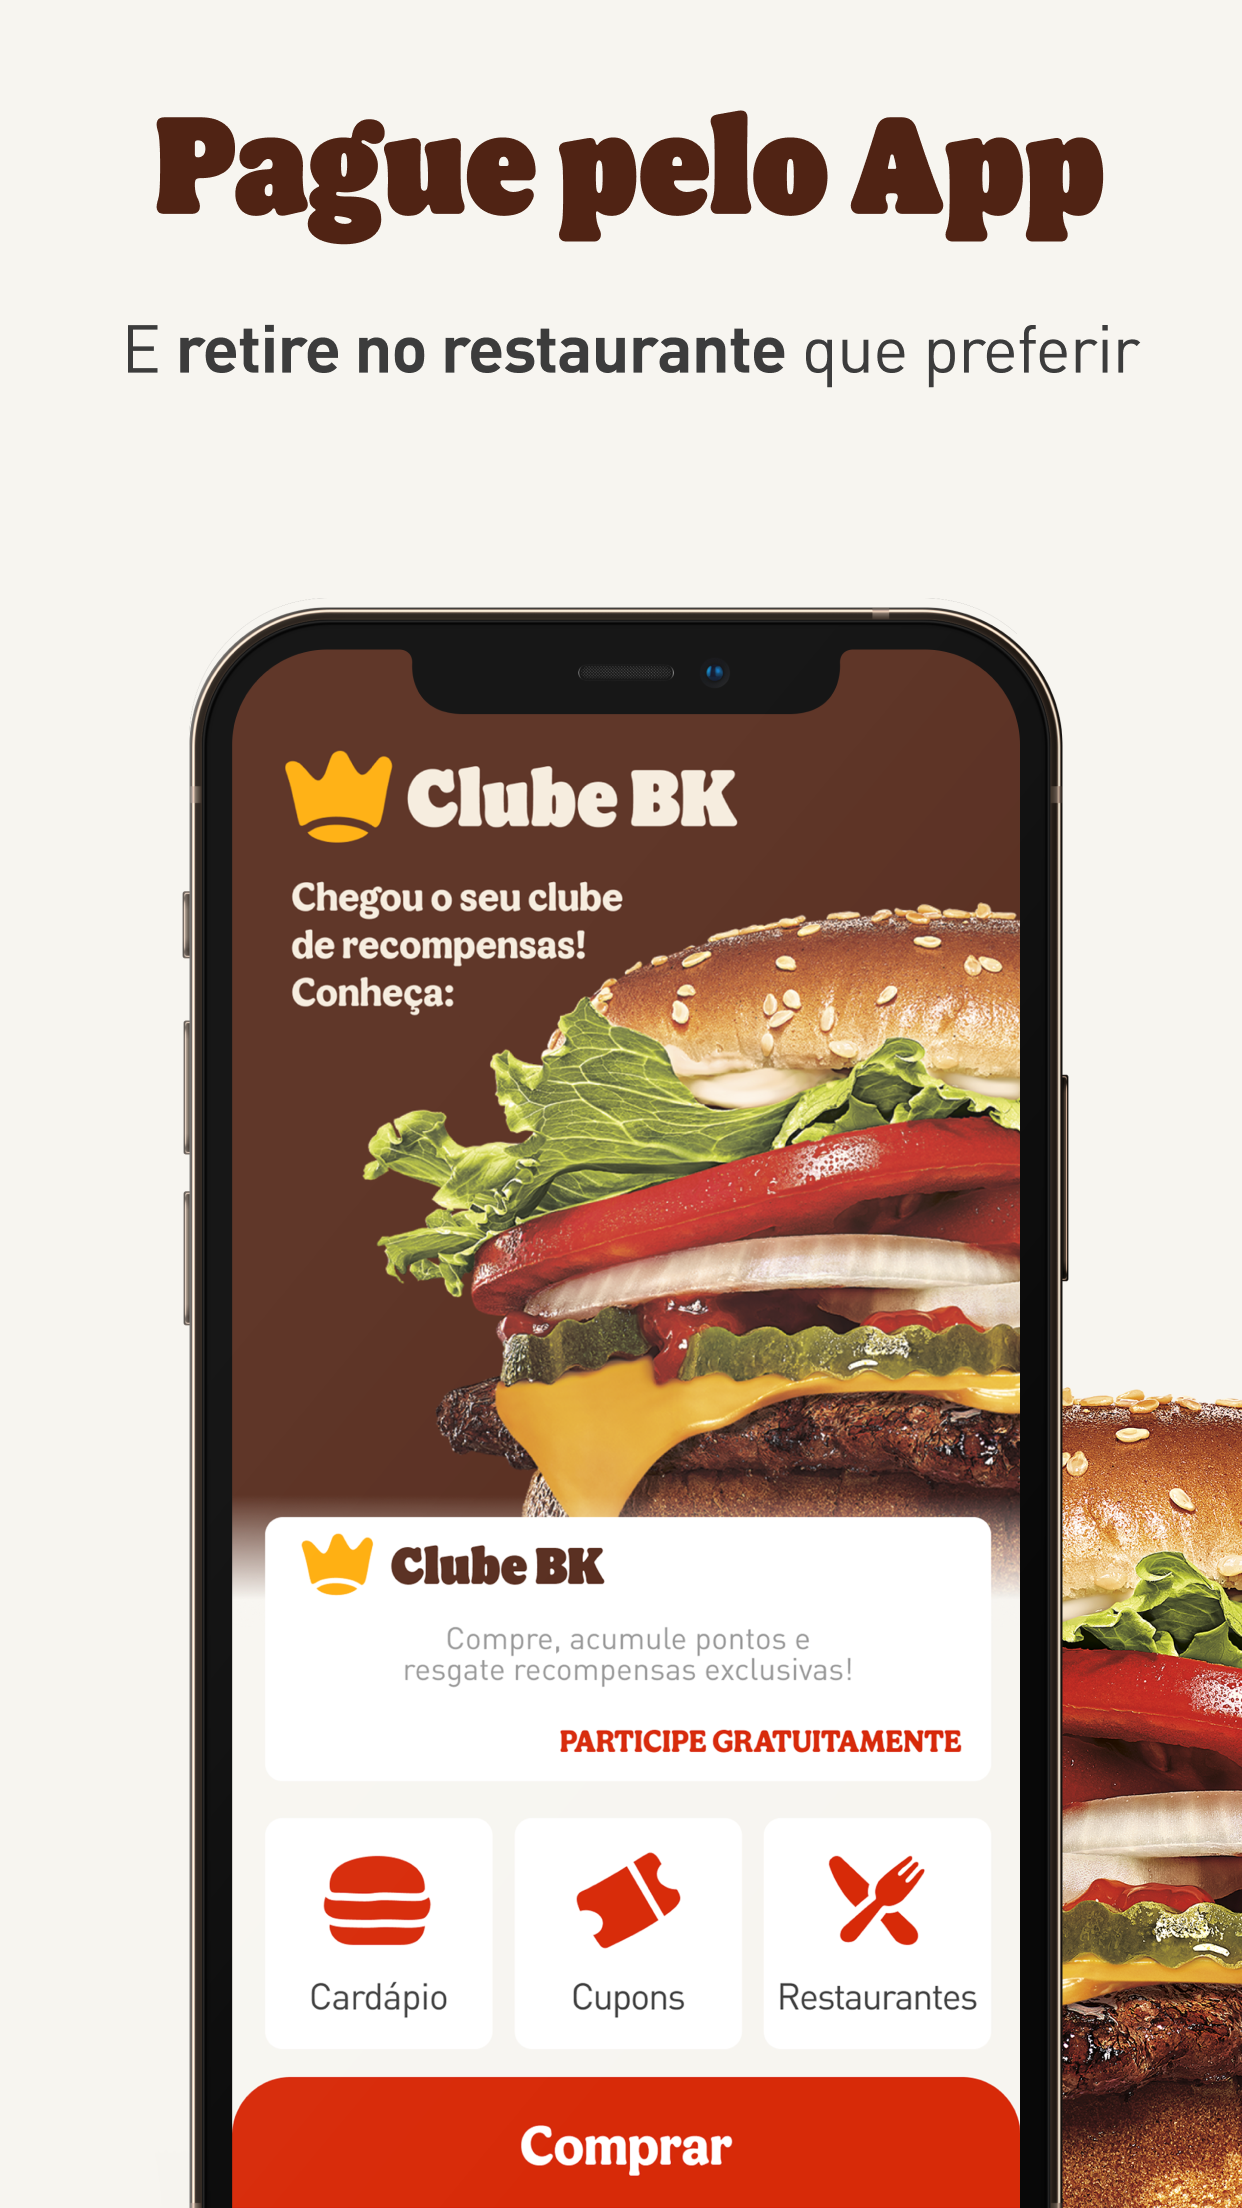 Burger King Brasil APK 3.15.12 for Android – Download Burger King Brasil  APK Latest Version from APKFab.com